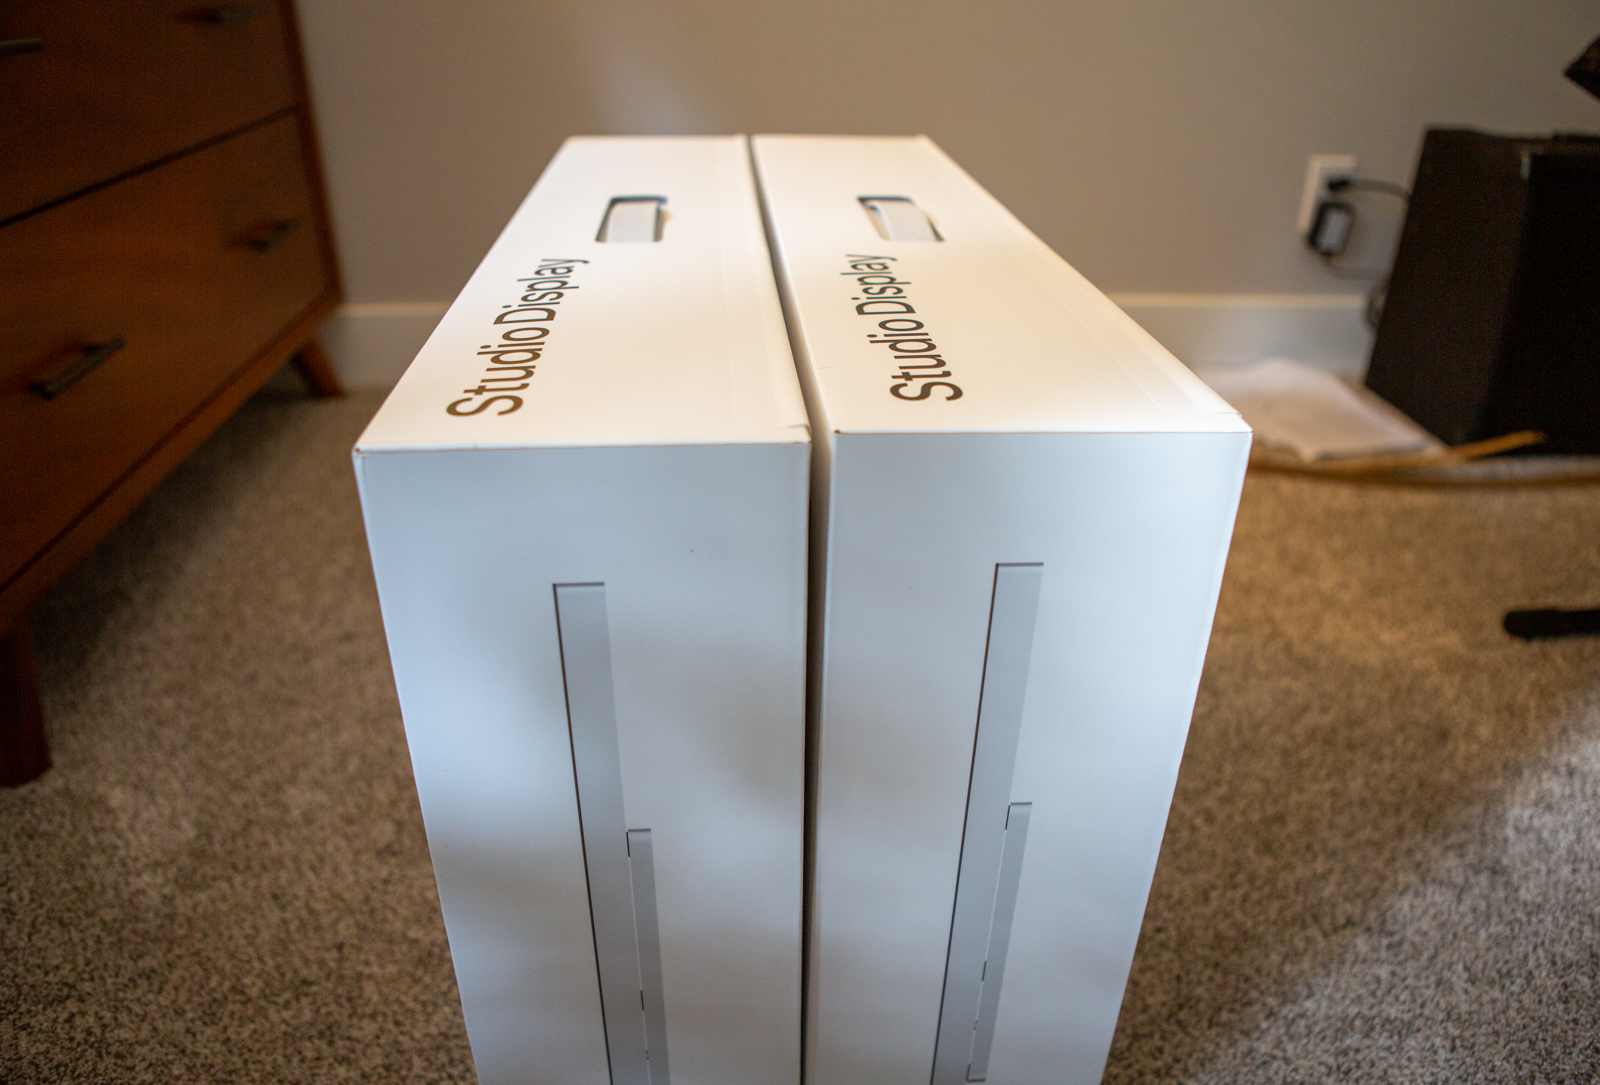 Two Apple Studio Display boxes.